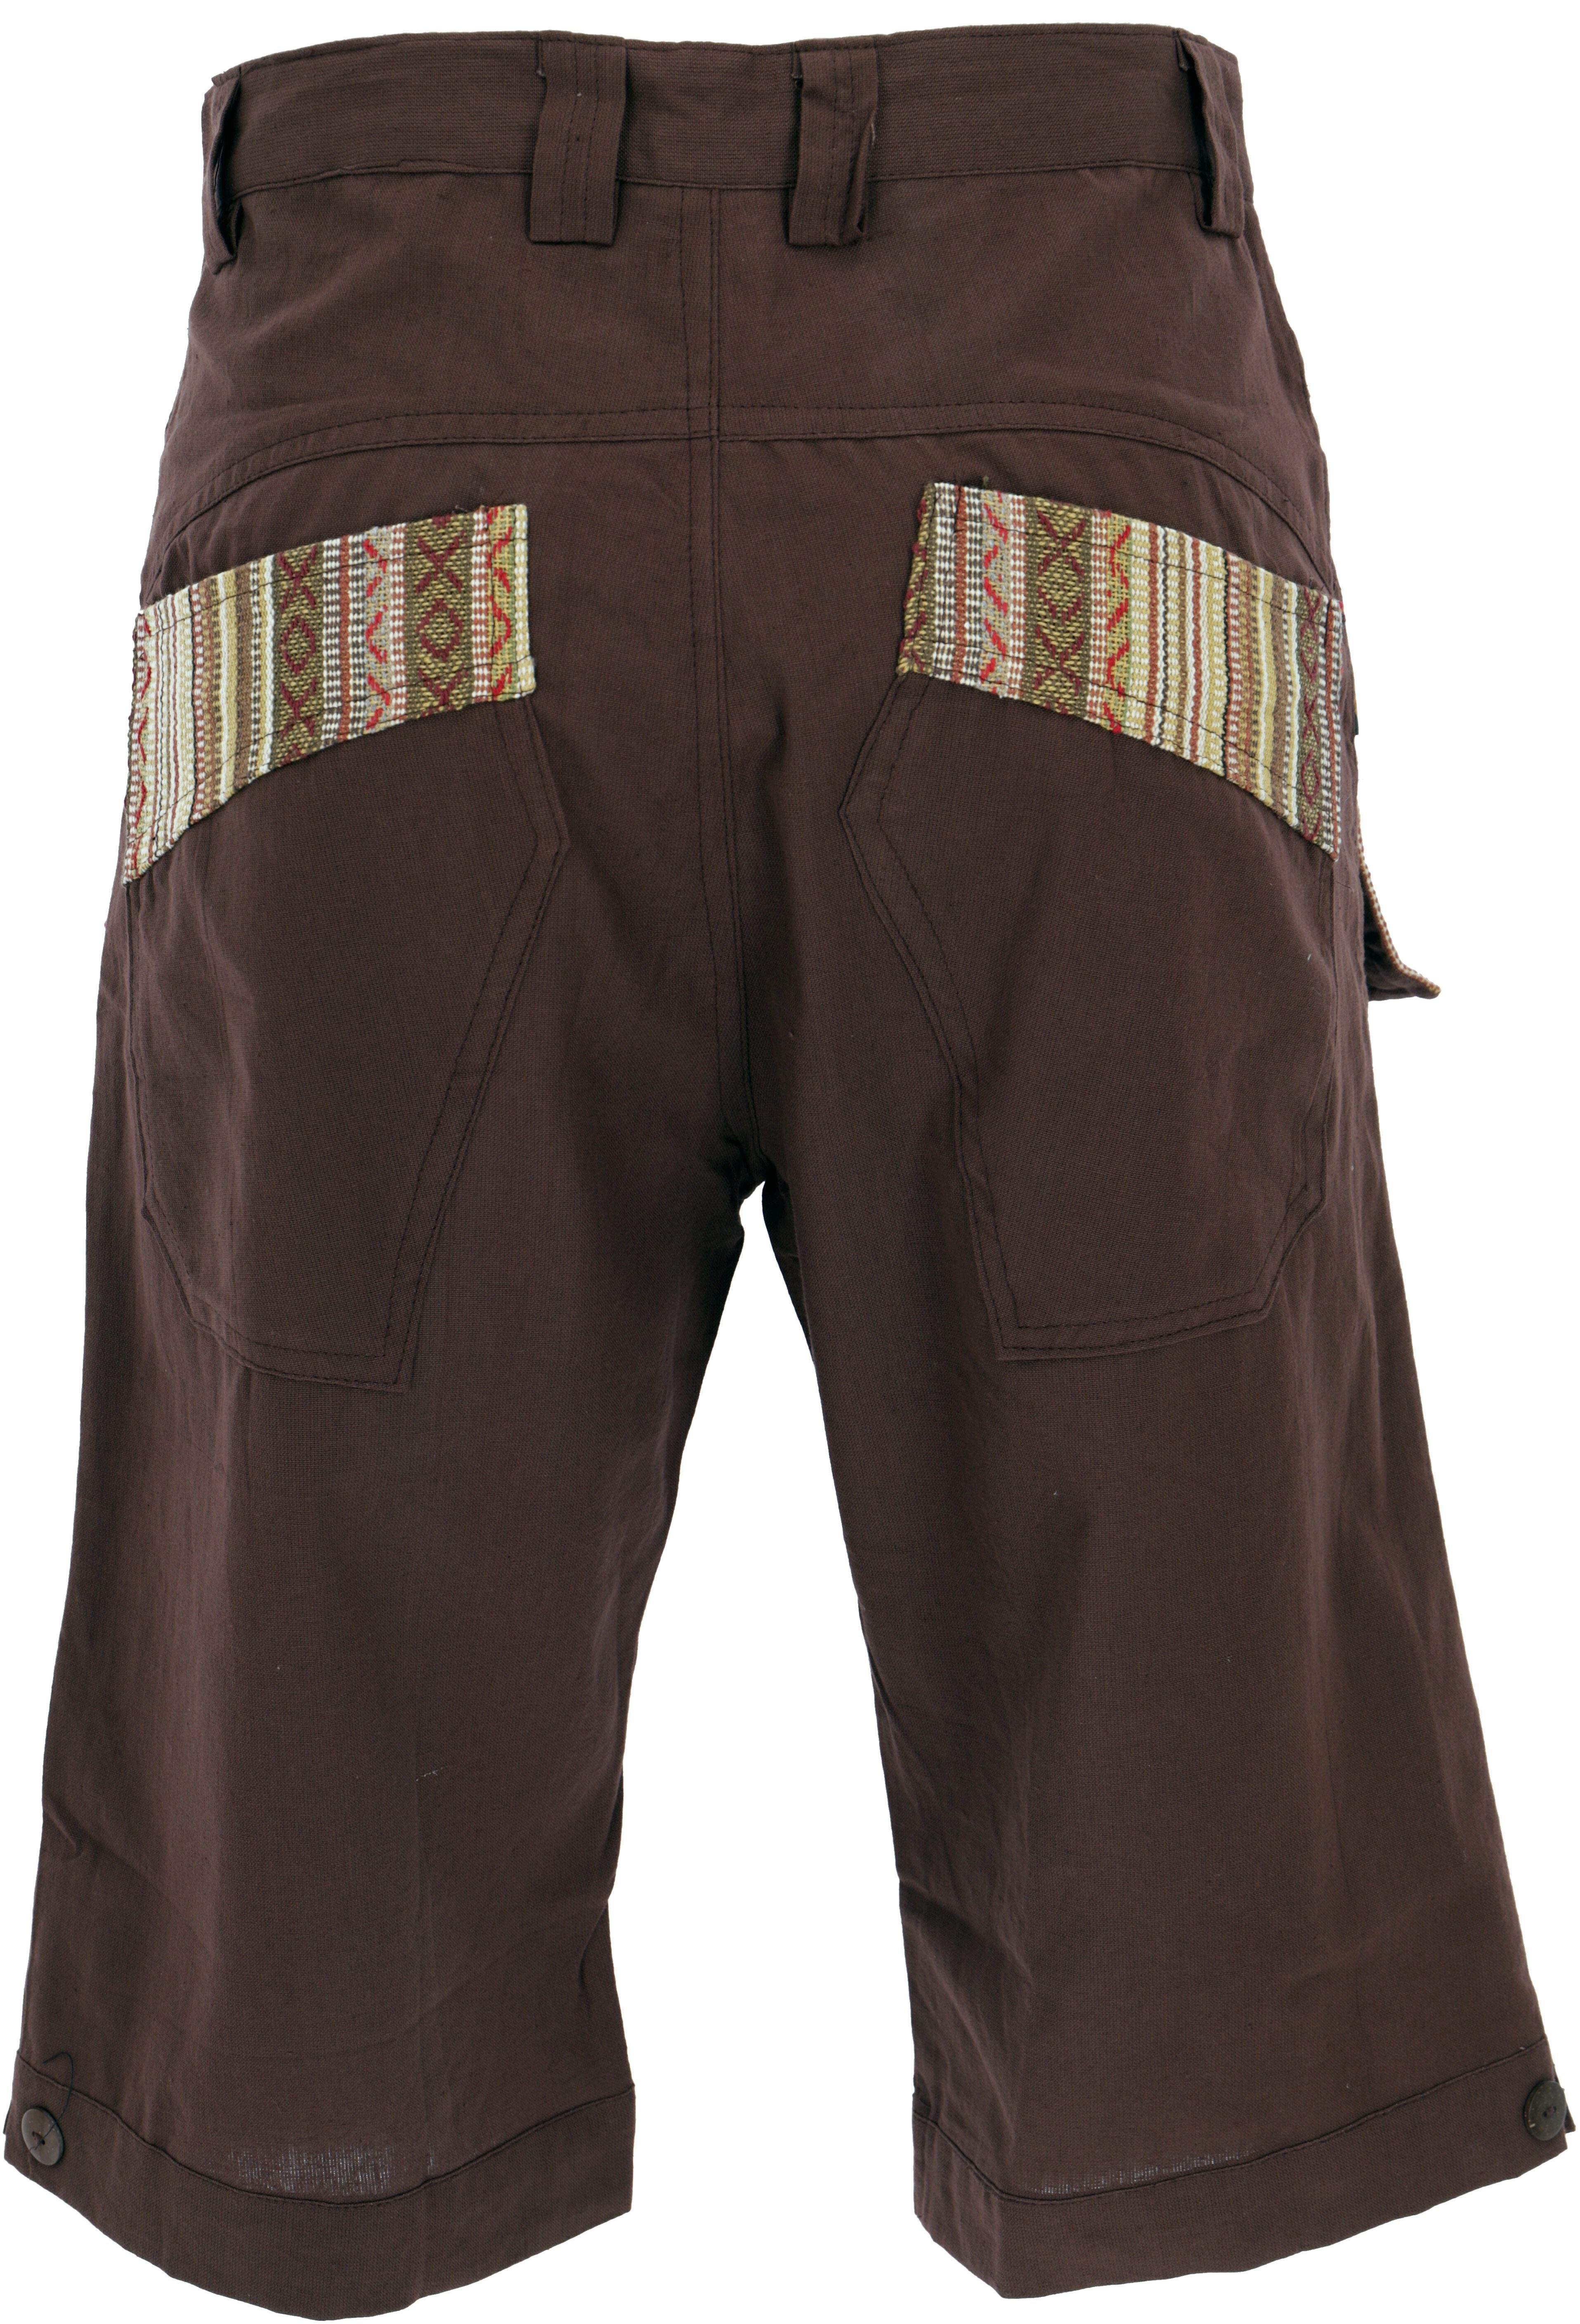 Guru-Shop Goa Relaxhose Ethno Kurze alternative Shorts braun Style, Hose, - Goa Bekleidung Yogahose,